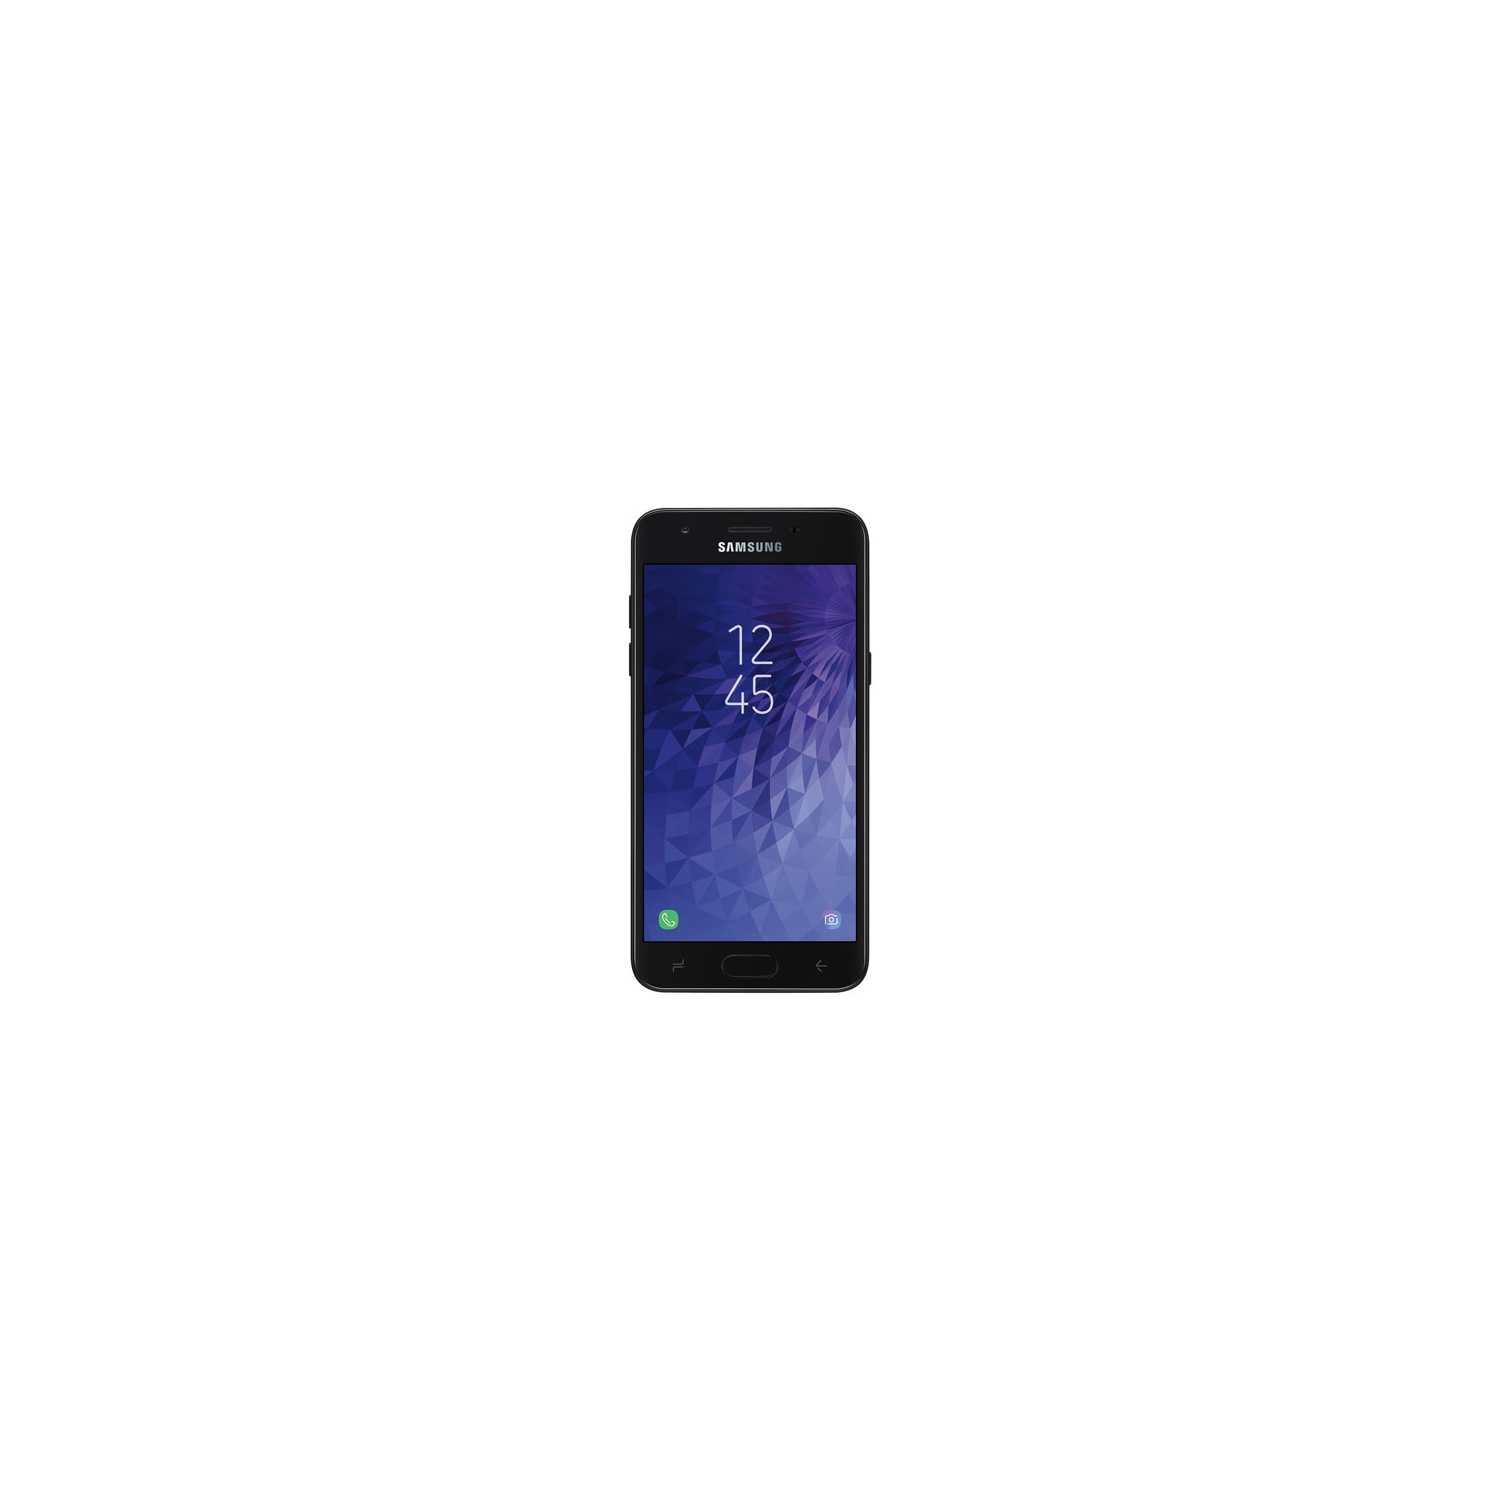 Samsung Galaxy J3 (2018) 16GB - Black - Unlocked - Open Box